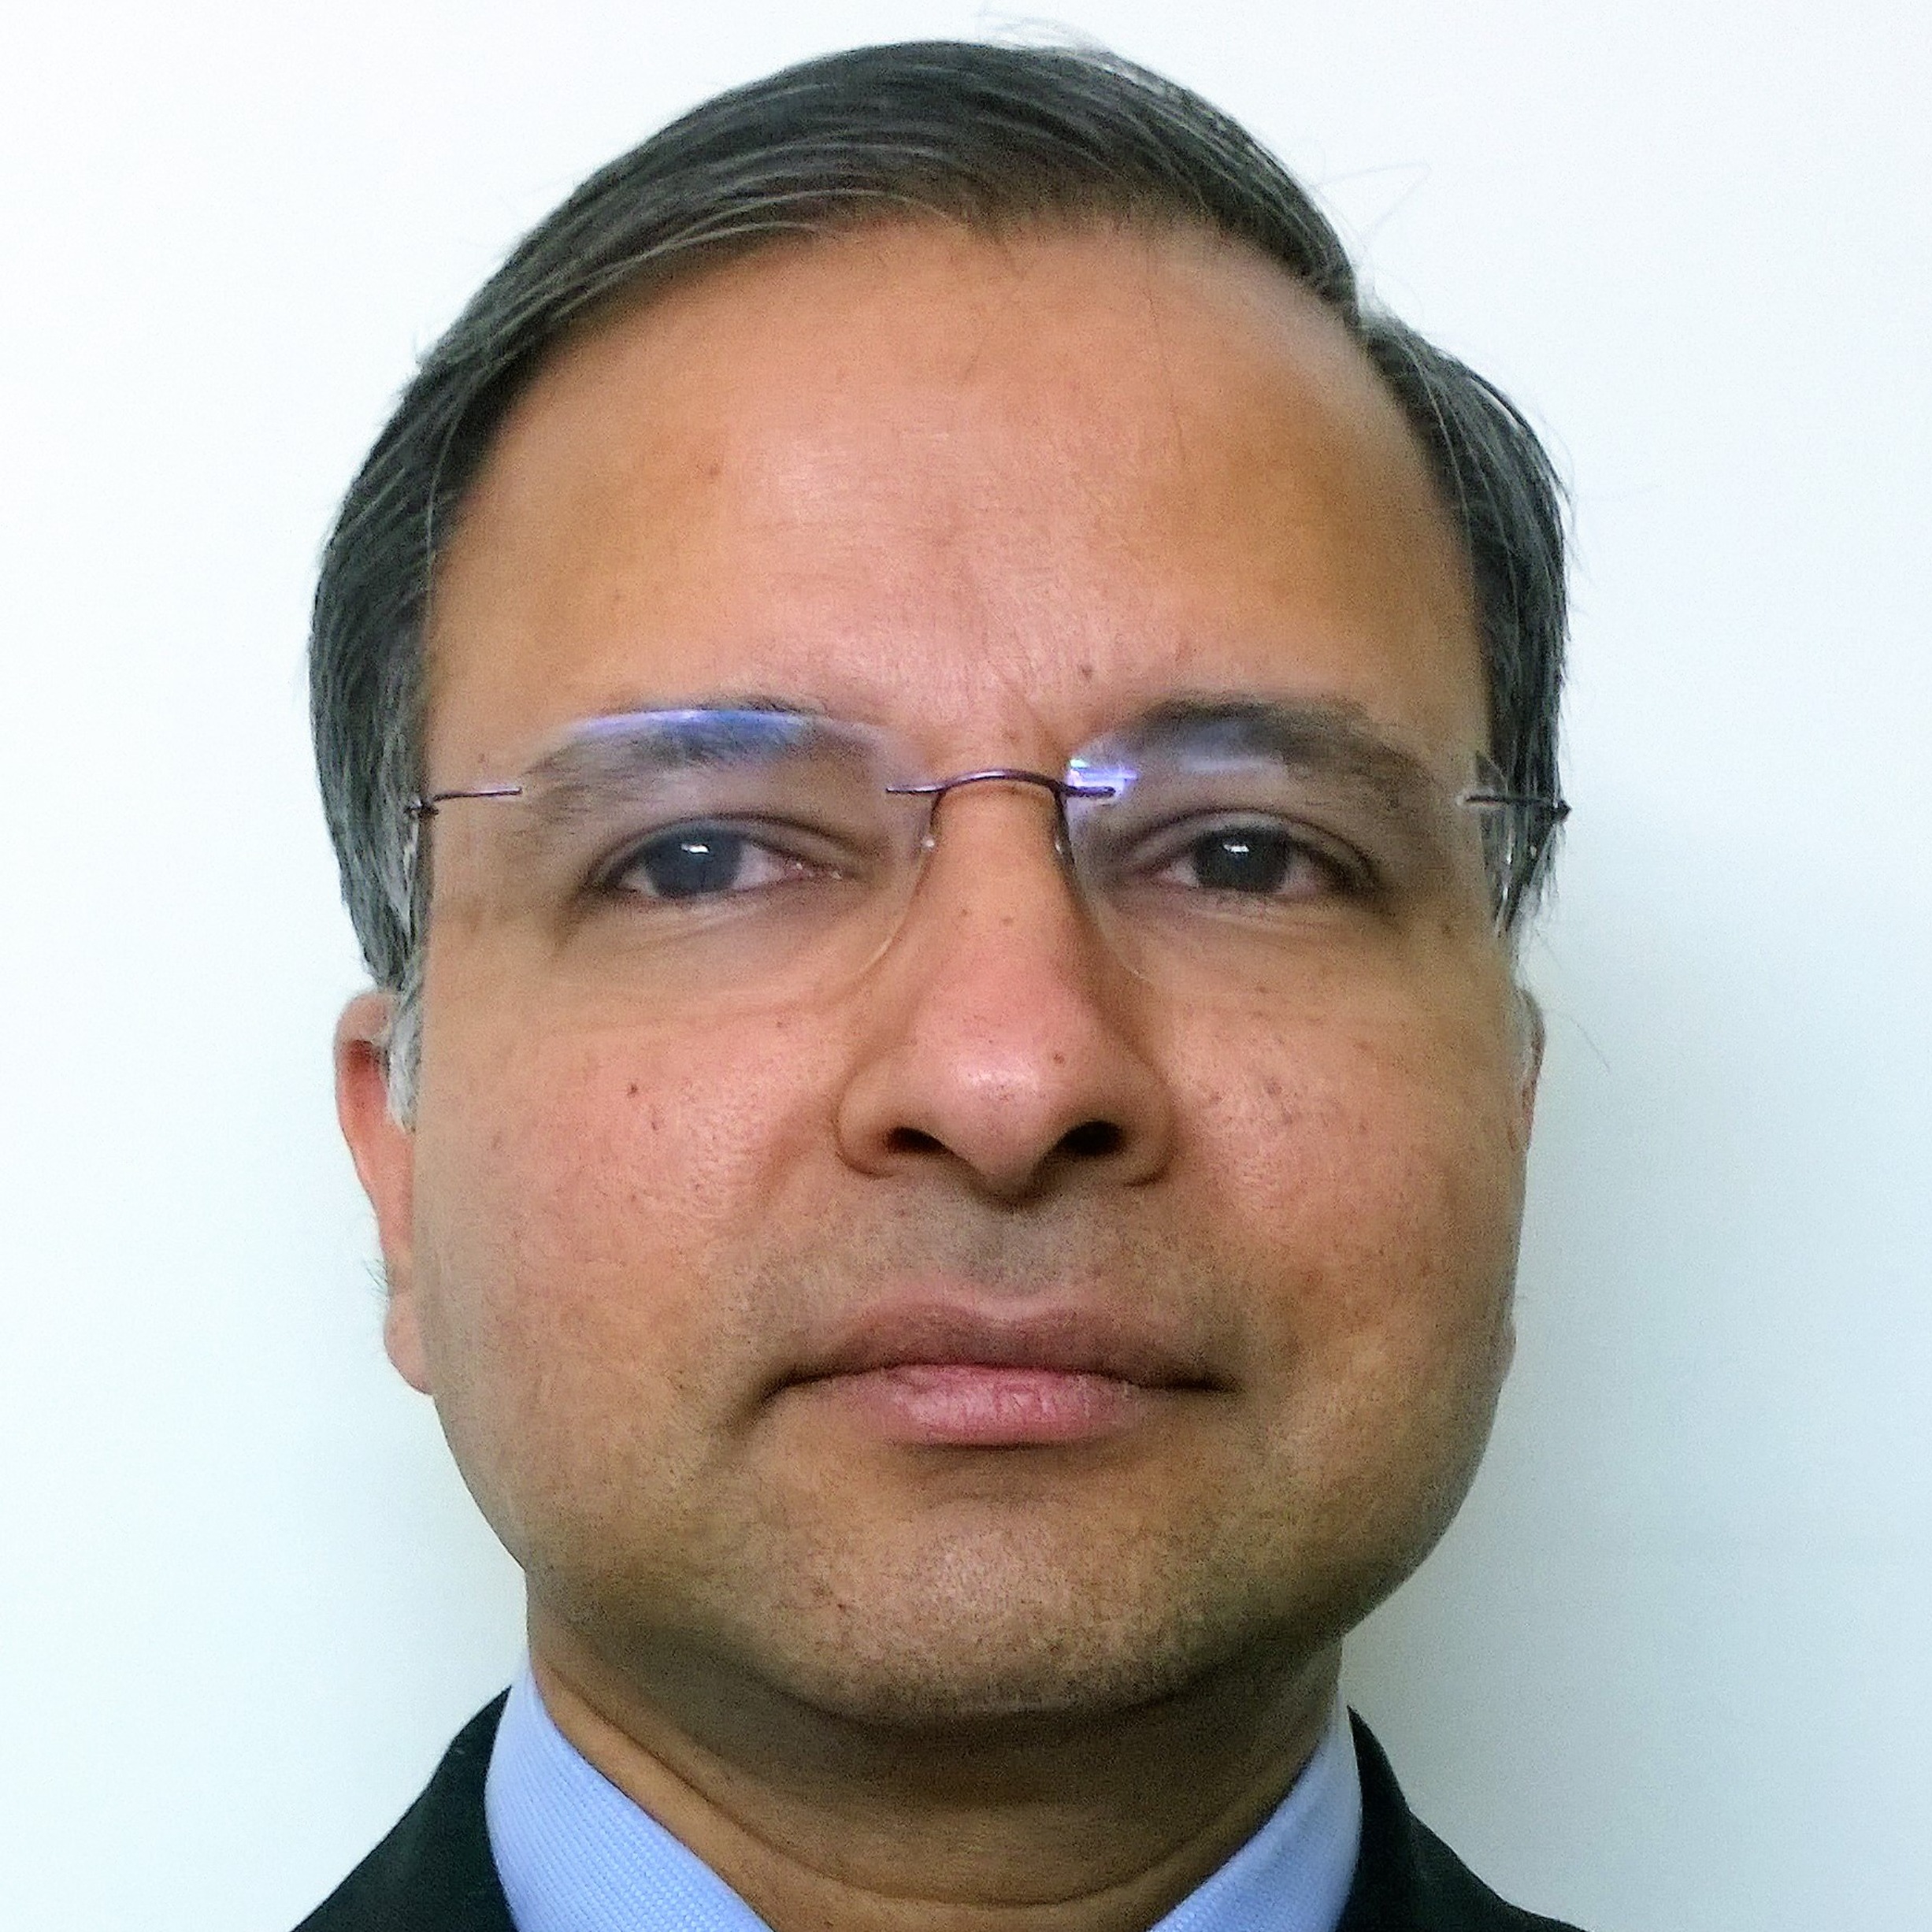 Dr. Ashok Menon